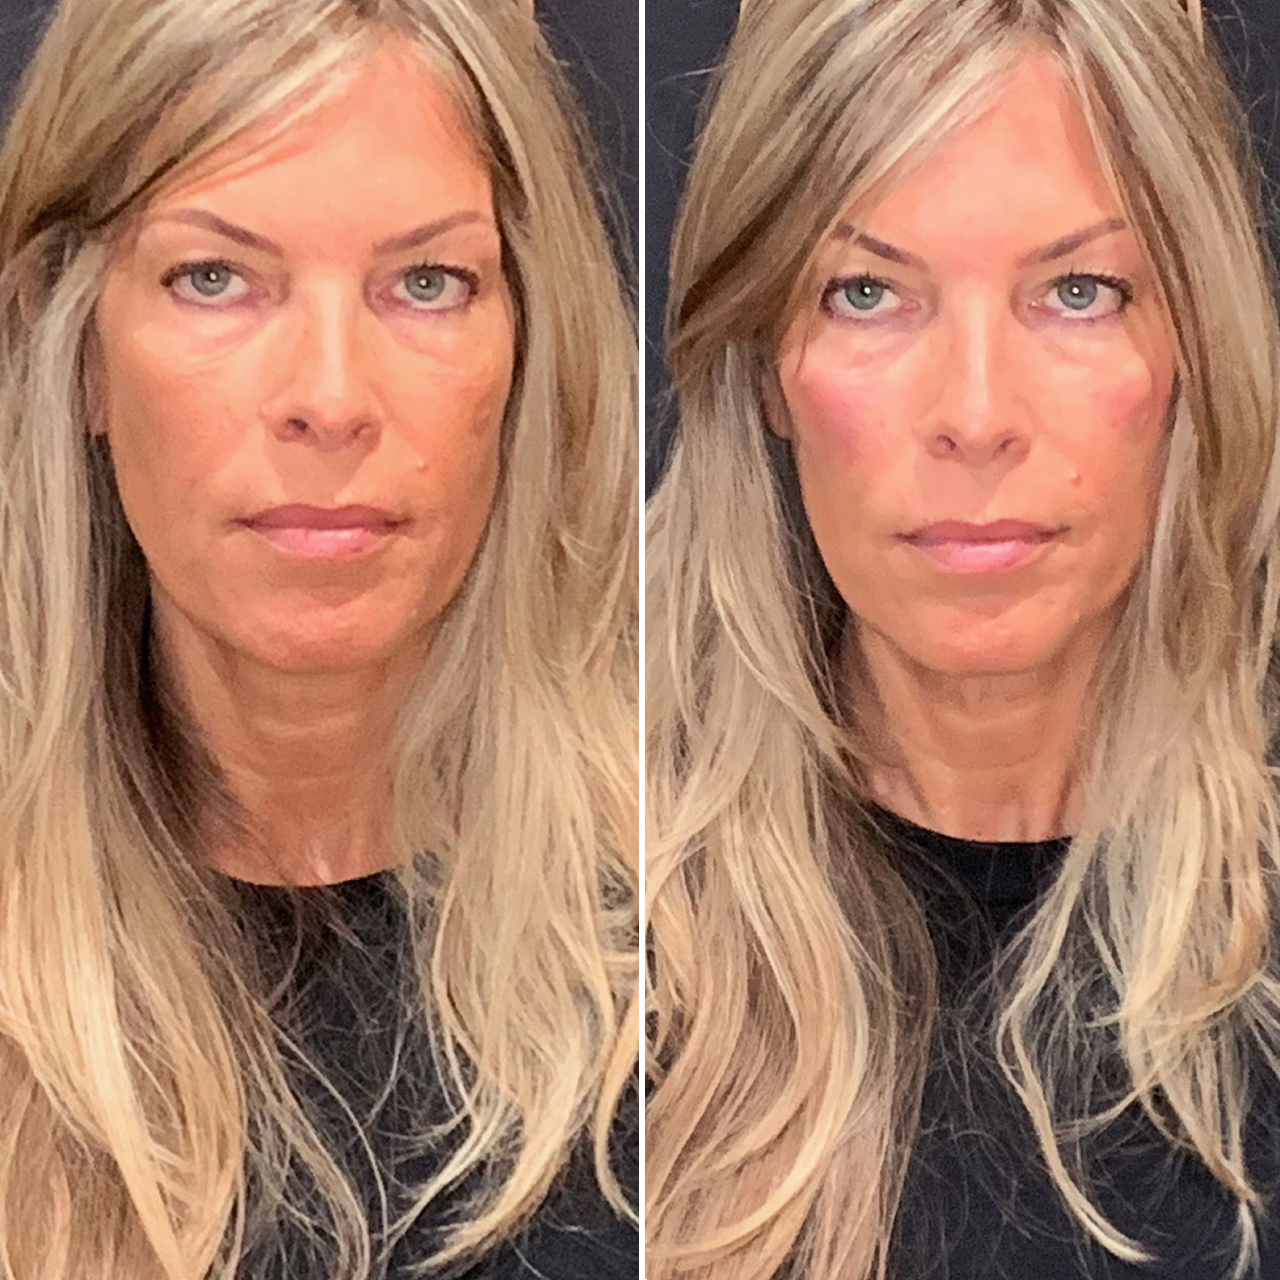 Before and after image of skin rejuvenation.